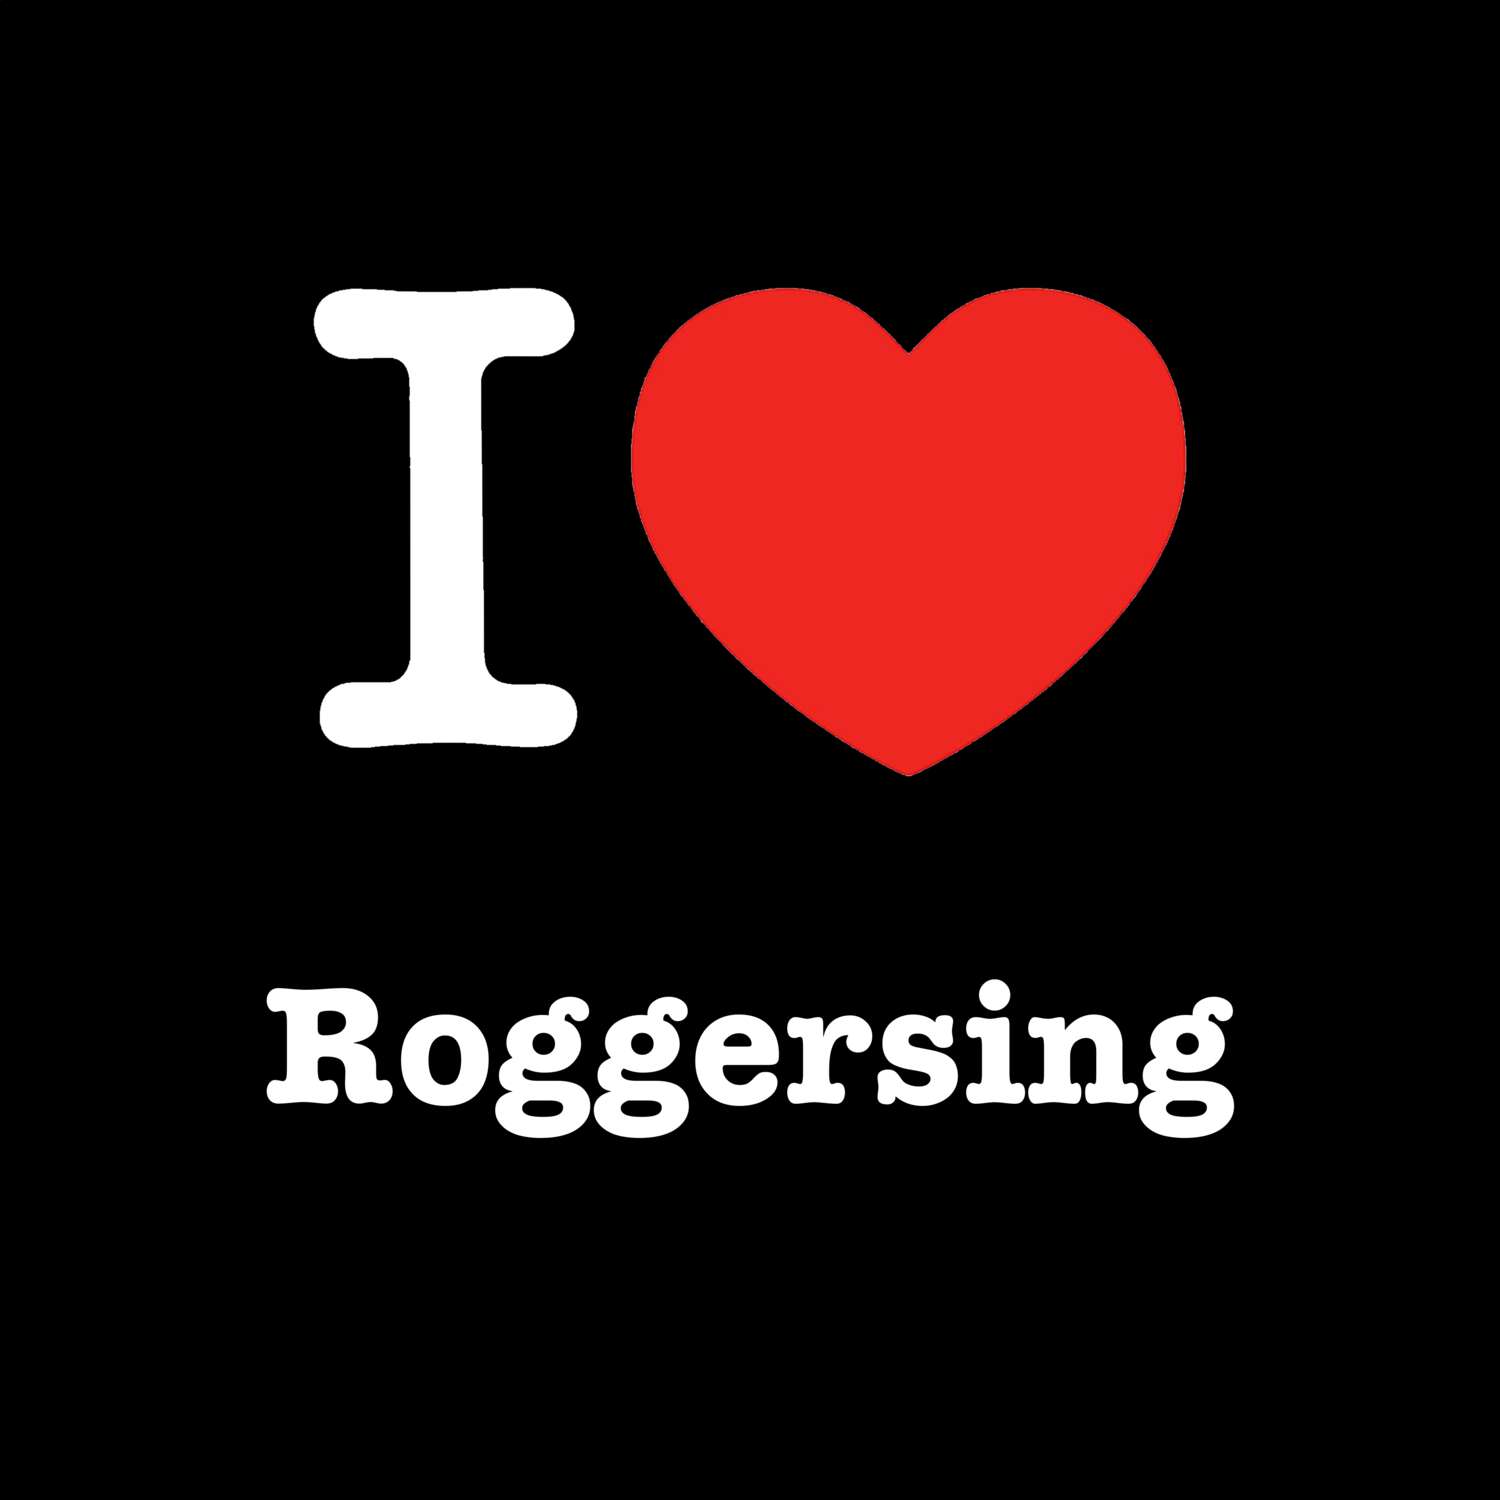 Roggersing T-Shirt »I love«